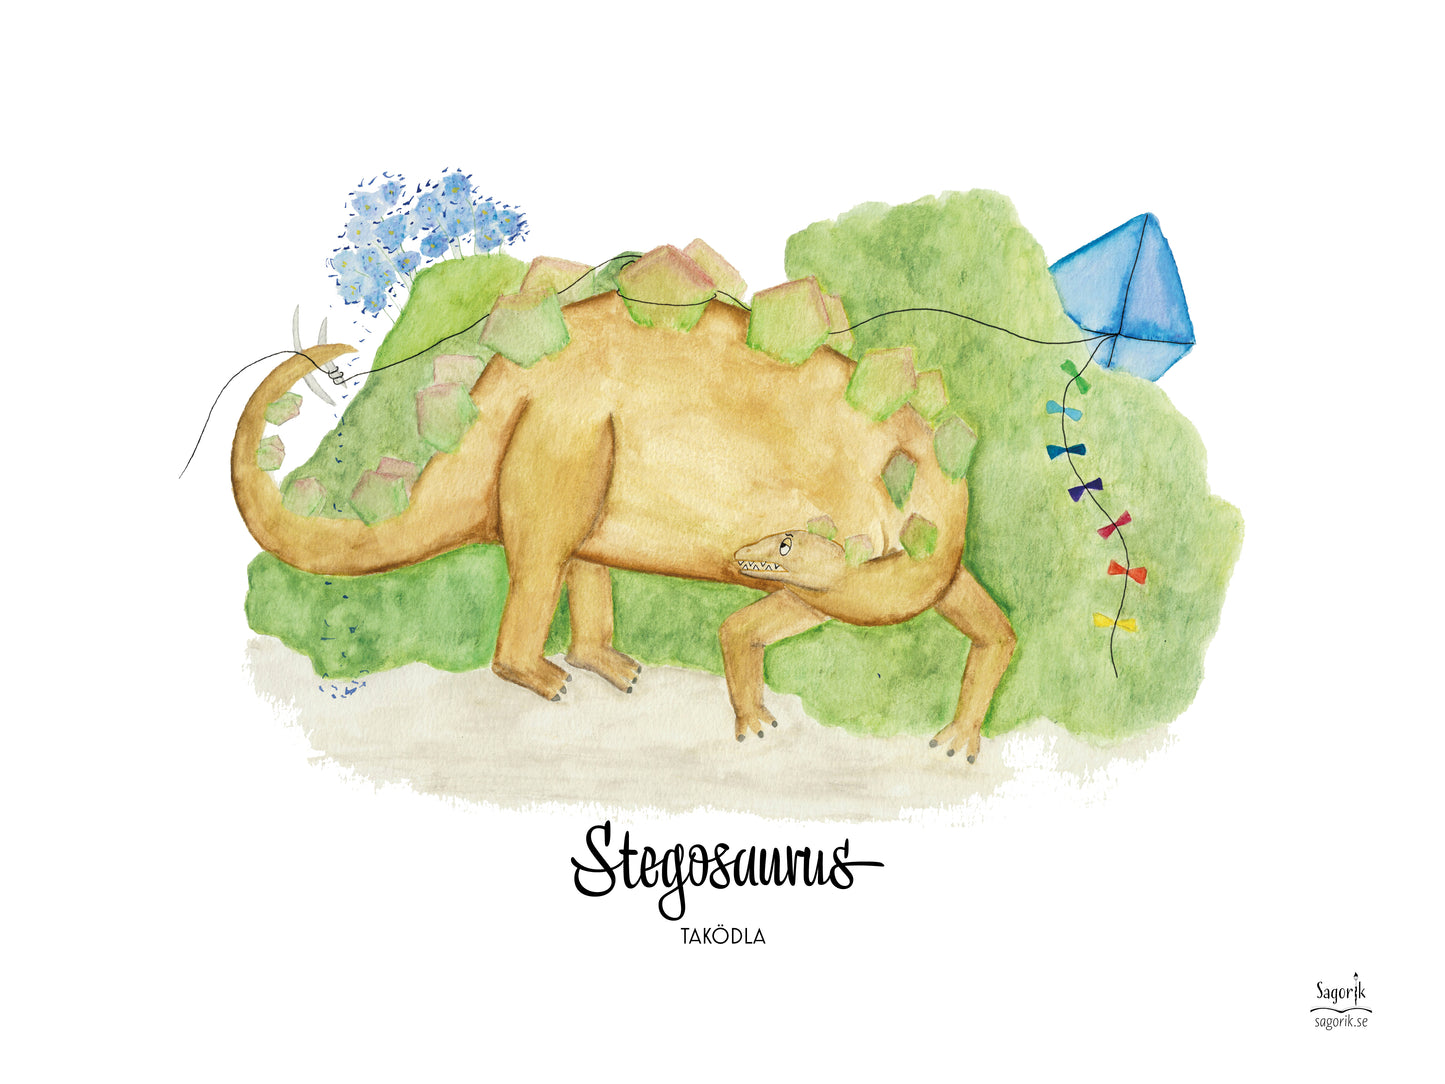 Stegososaurus poster